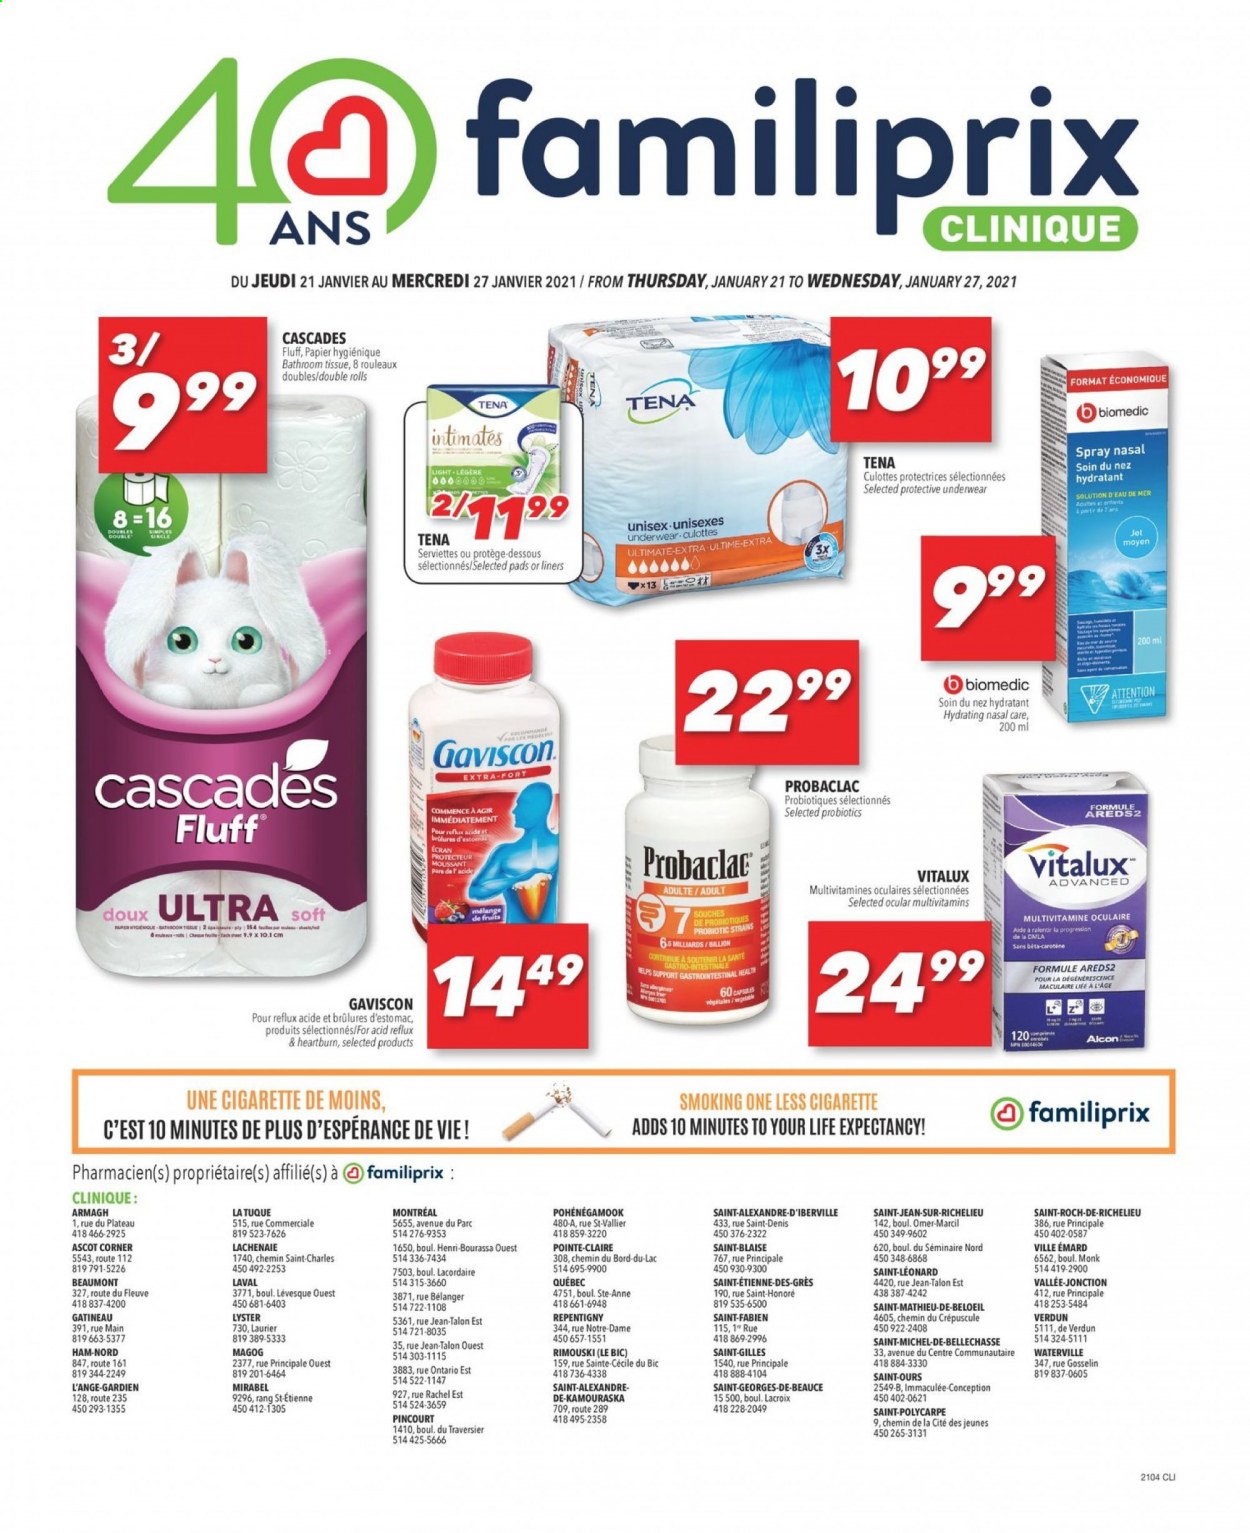 thumbnail - Familiprix Clinique Flyer - January 21, 2021 - January 27, 2021 - Sales products - bath tissue, Jet, sanitary pads, Clinique, BIC, multivitamin, probiotics, Gaviscon. Page 1.